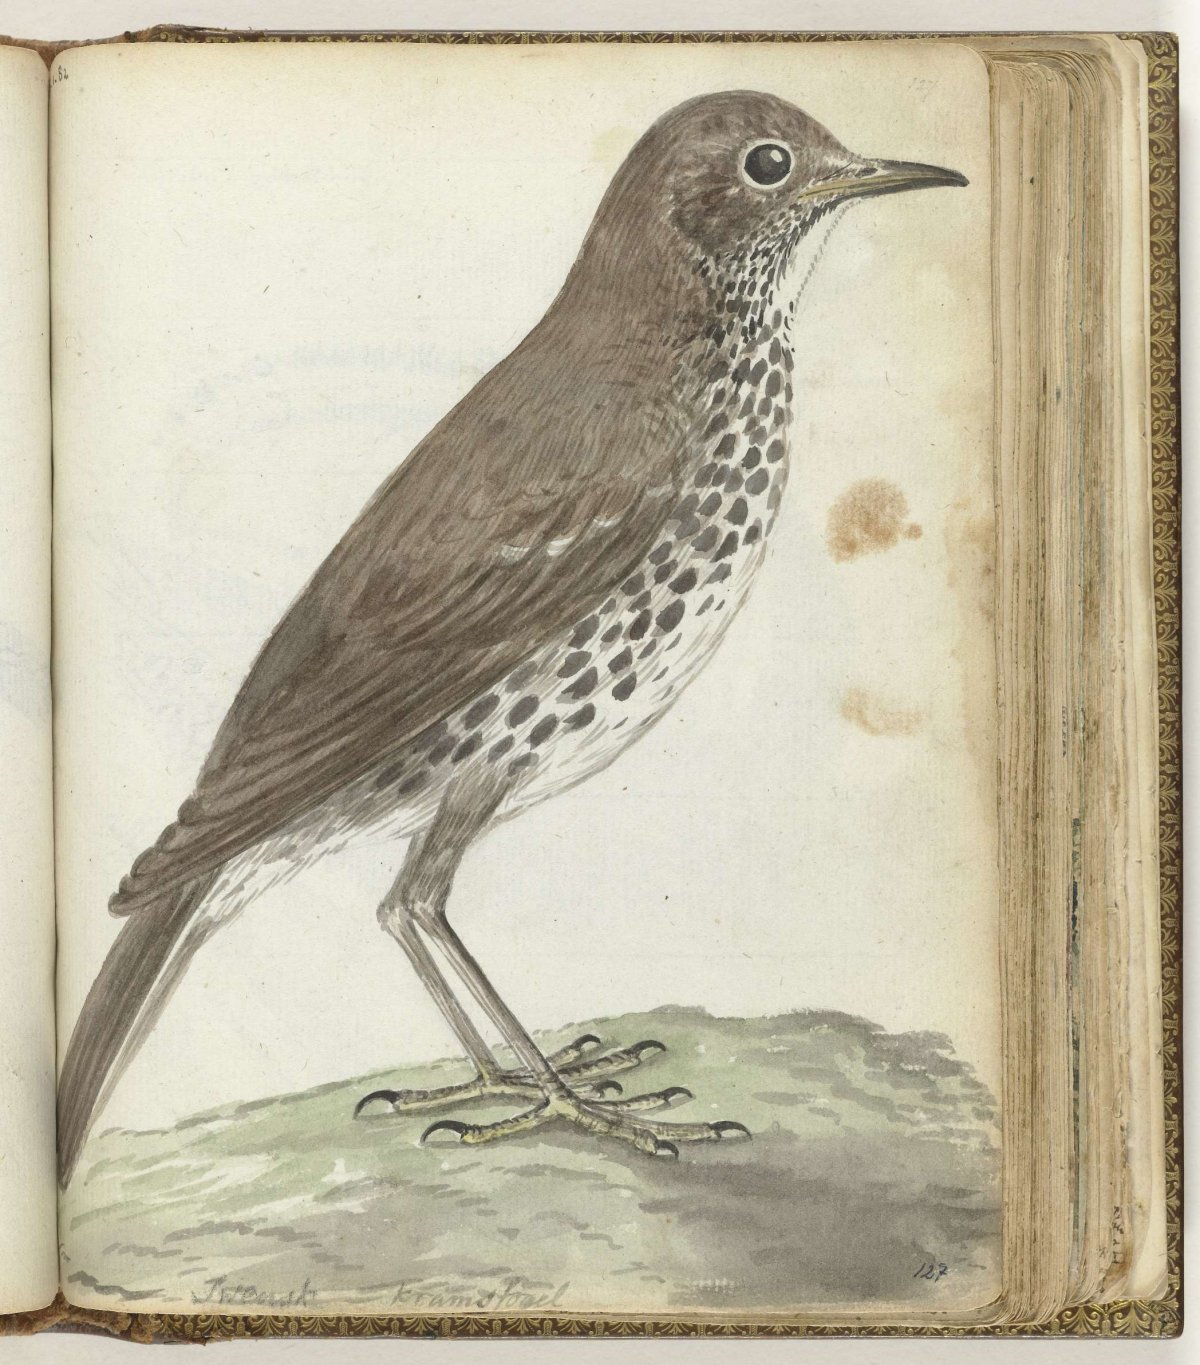 Swedish bird, Jan Brandes, 1787 - 1808